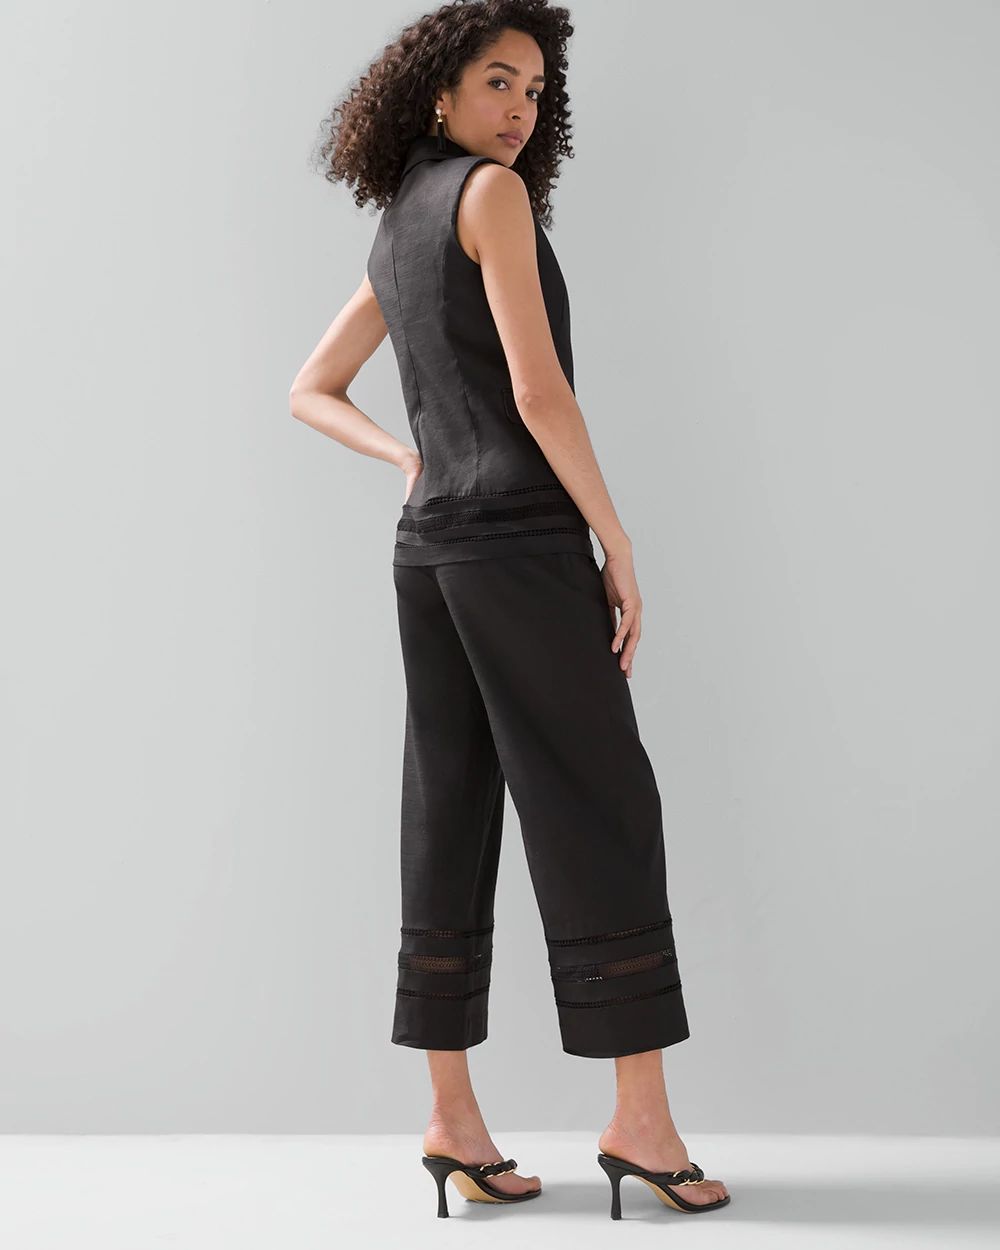 Linen-Blend Tassel-Tie Wide-Leg Crop Pants click to view larger image.